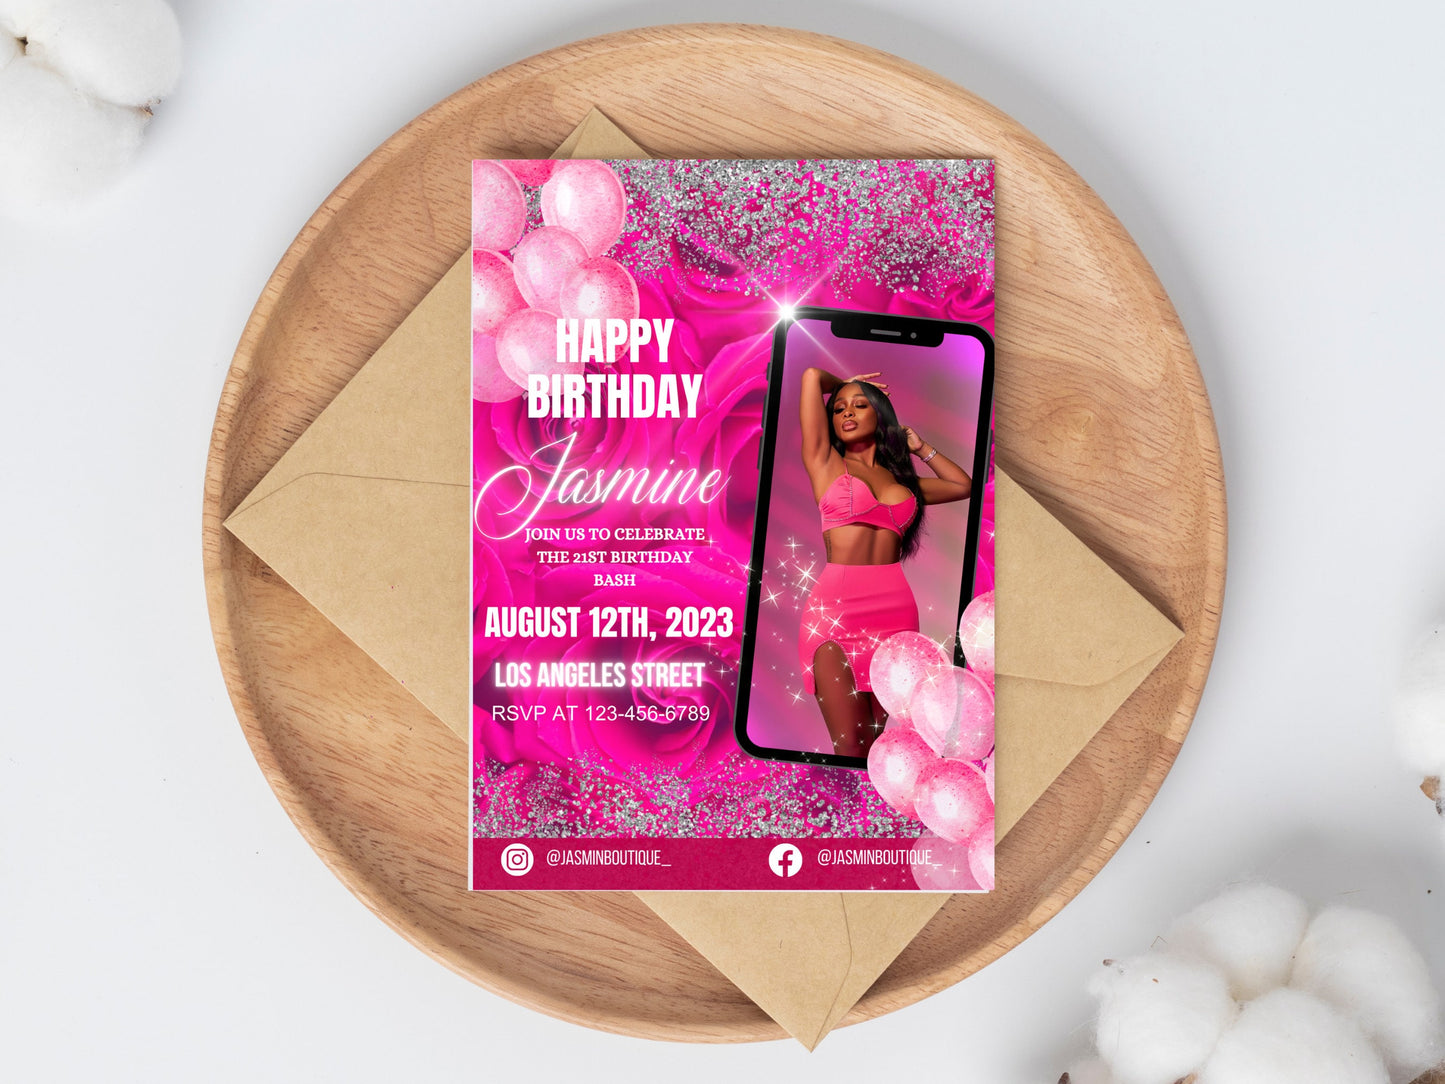 Birthday Bash invite, Digital Bday card, DIY invite Template Design, Birthday Party Invites Flyer, Premade Celebration birthday invite